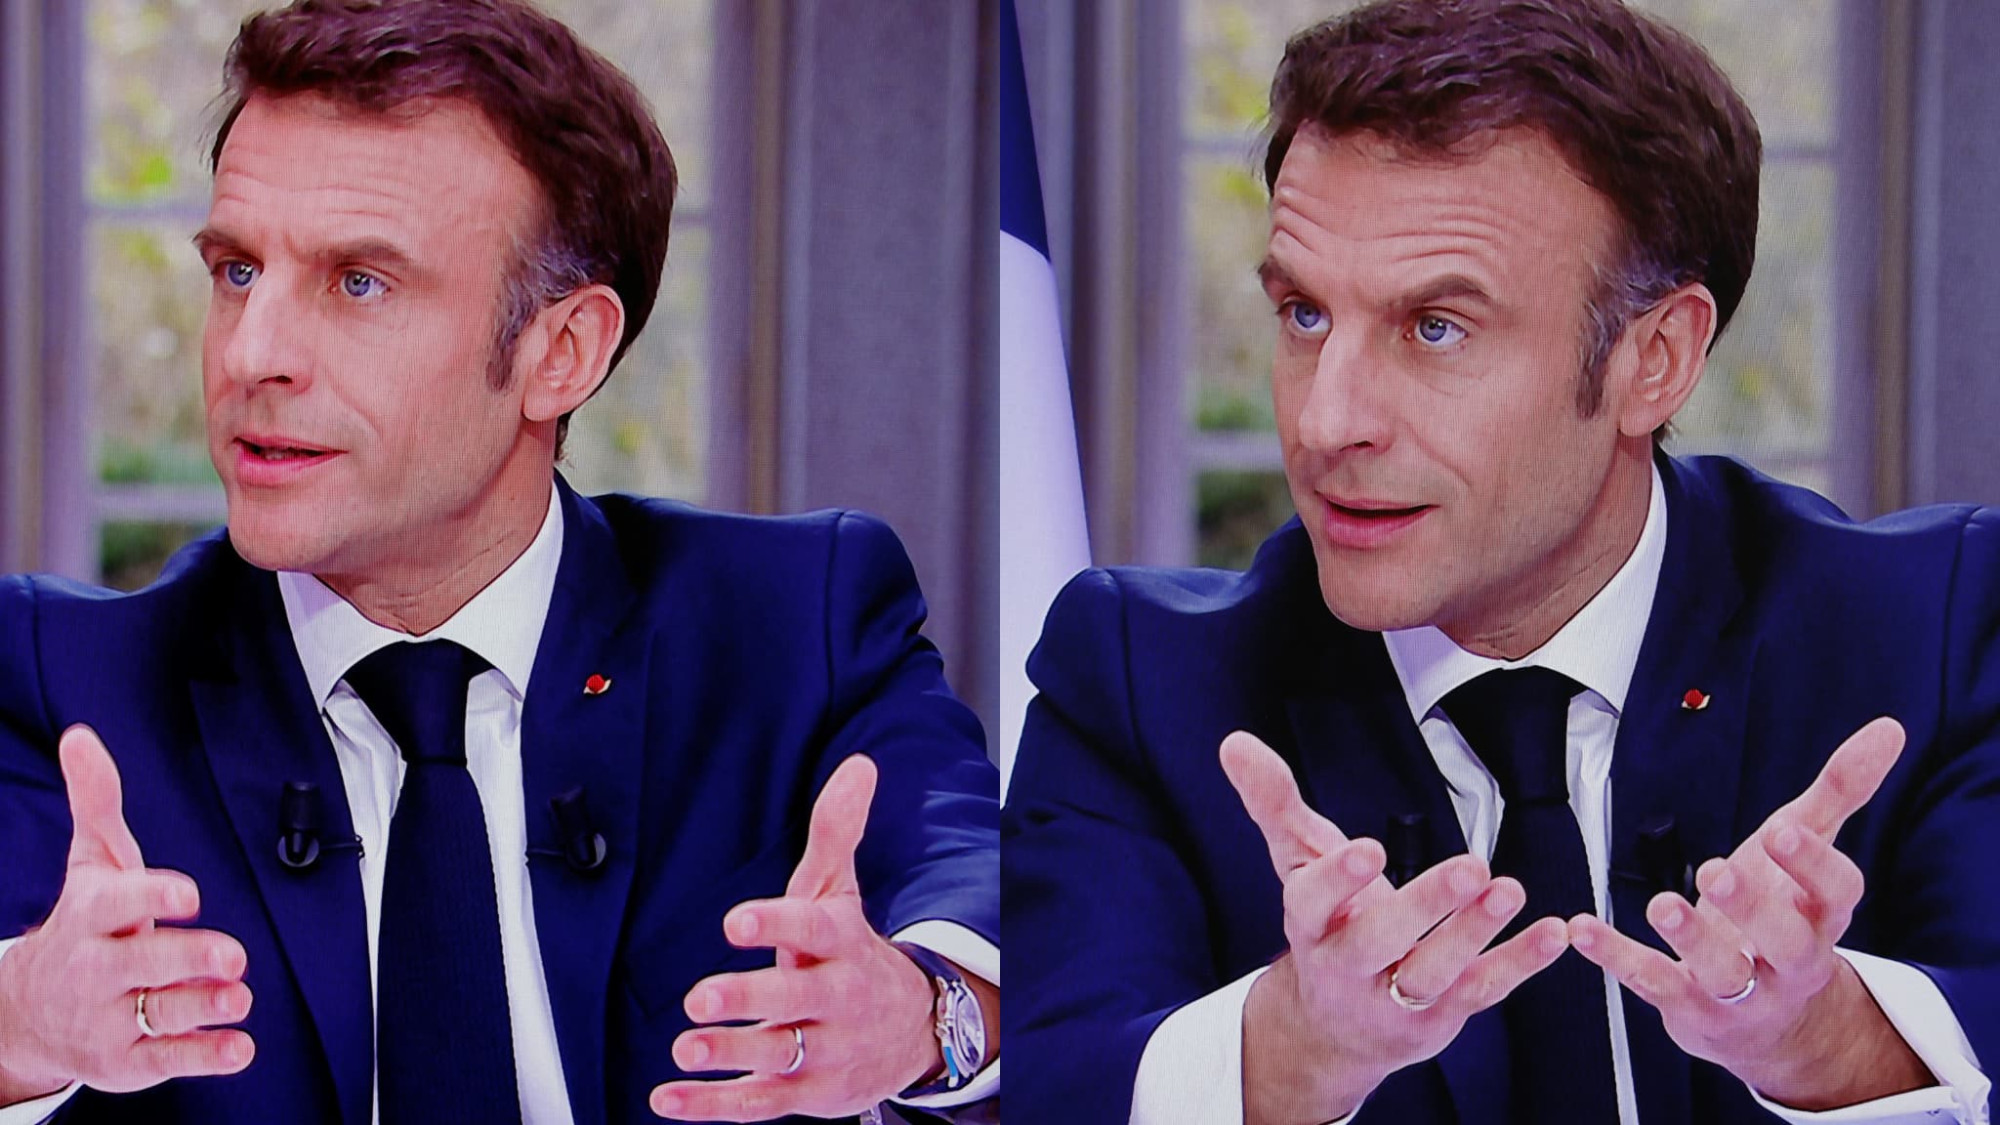 Di Prancis, mereka mendiskusikan mengapa Macron “secara tidak sengaja” melepas jam tangannya yang mahal di siaran langsung TV (video) – Berita dari Armenia